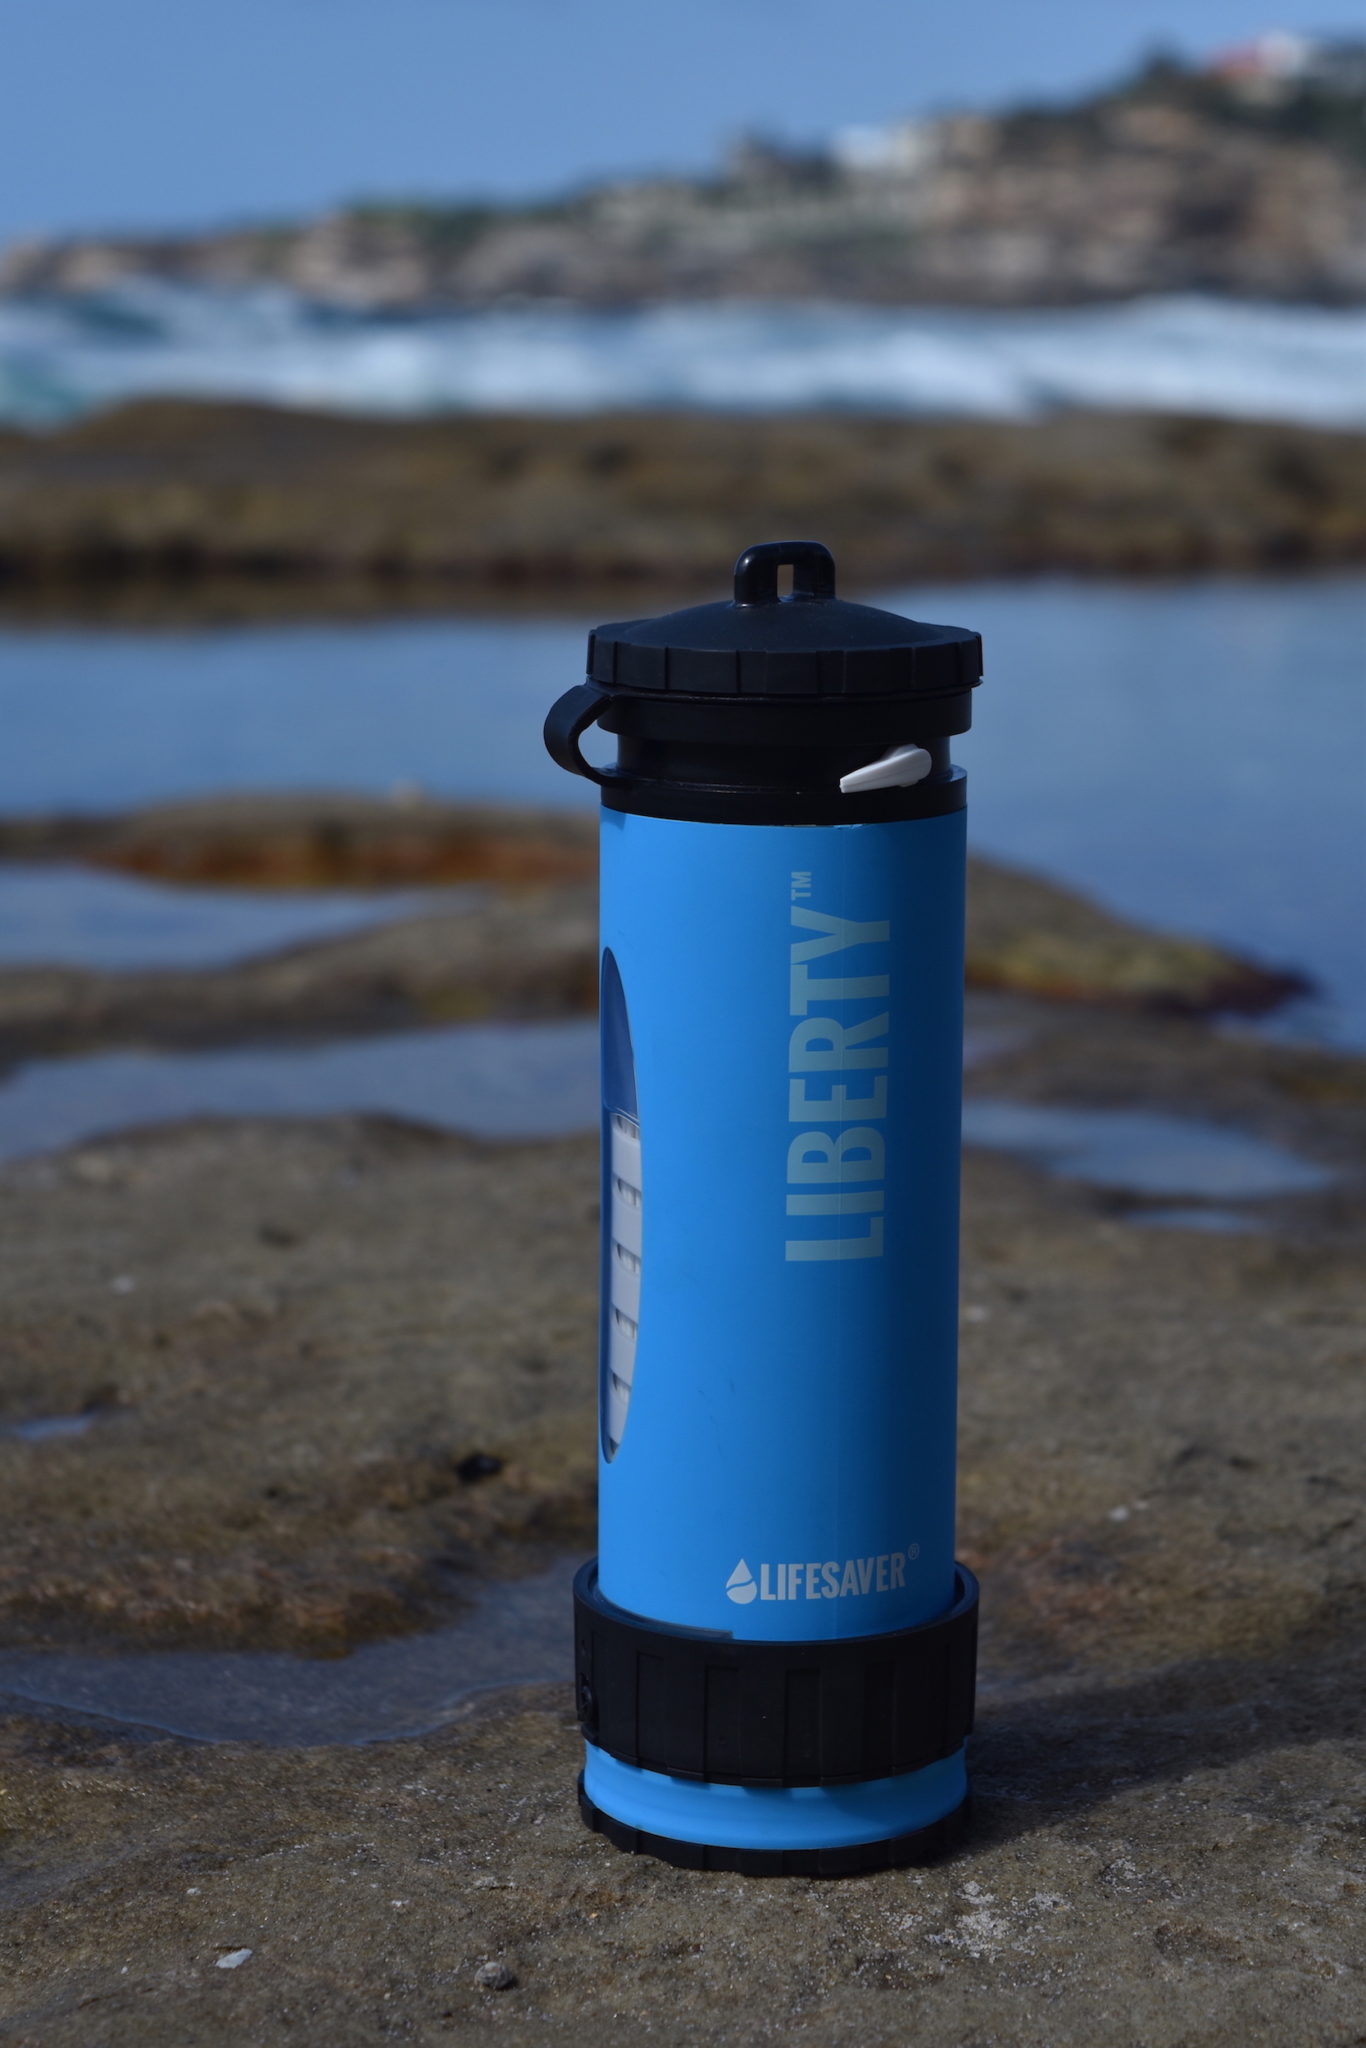 Lifesaver Liberty filter water bottle